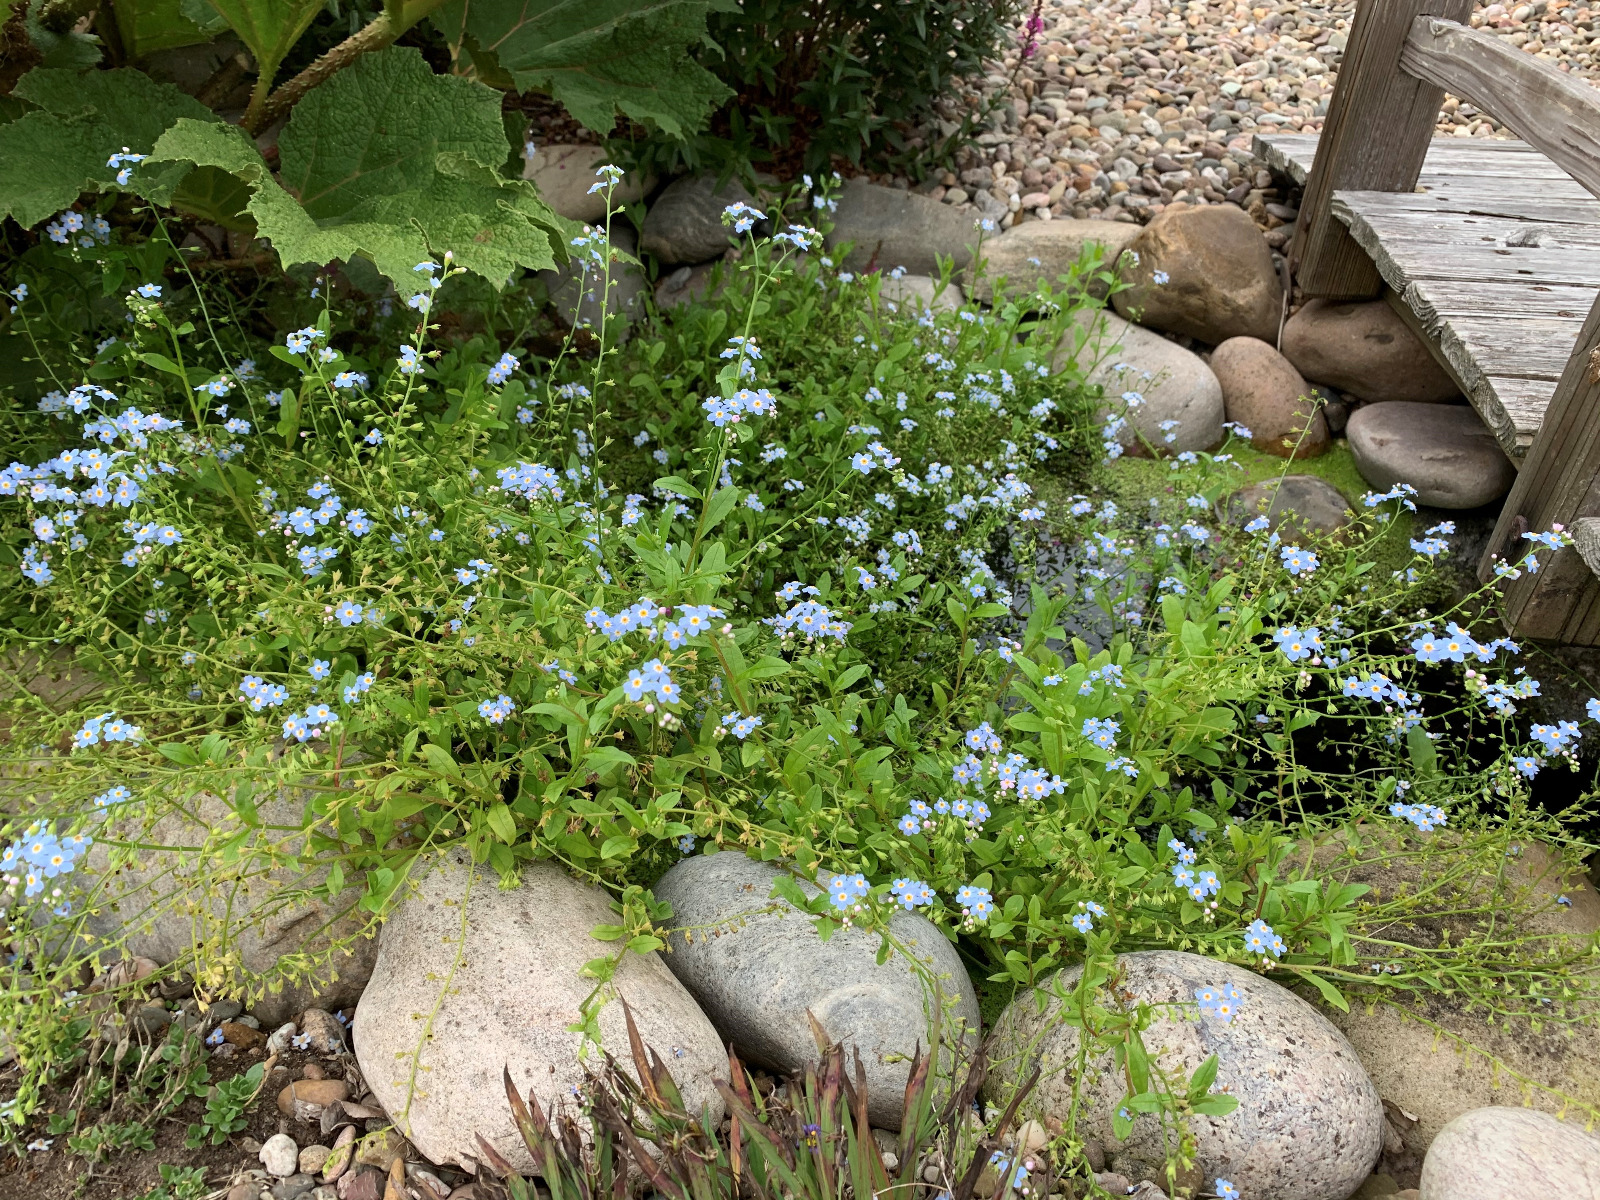 Pond plants with blue flower Maidenhead Aquatics